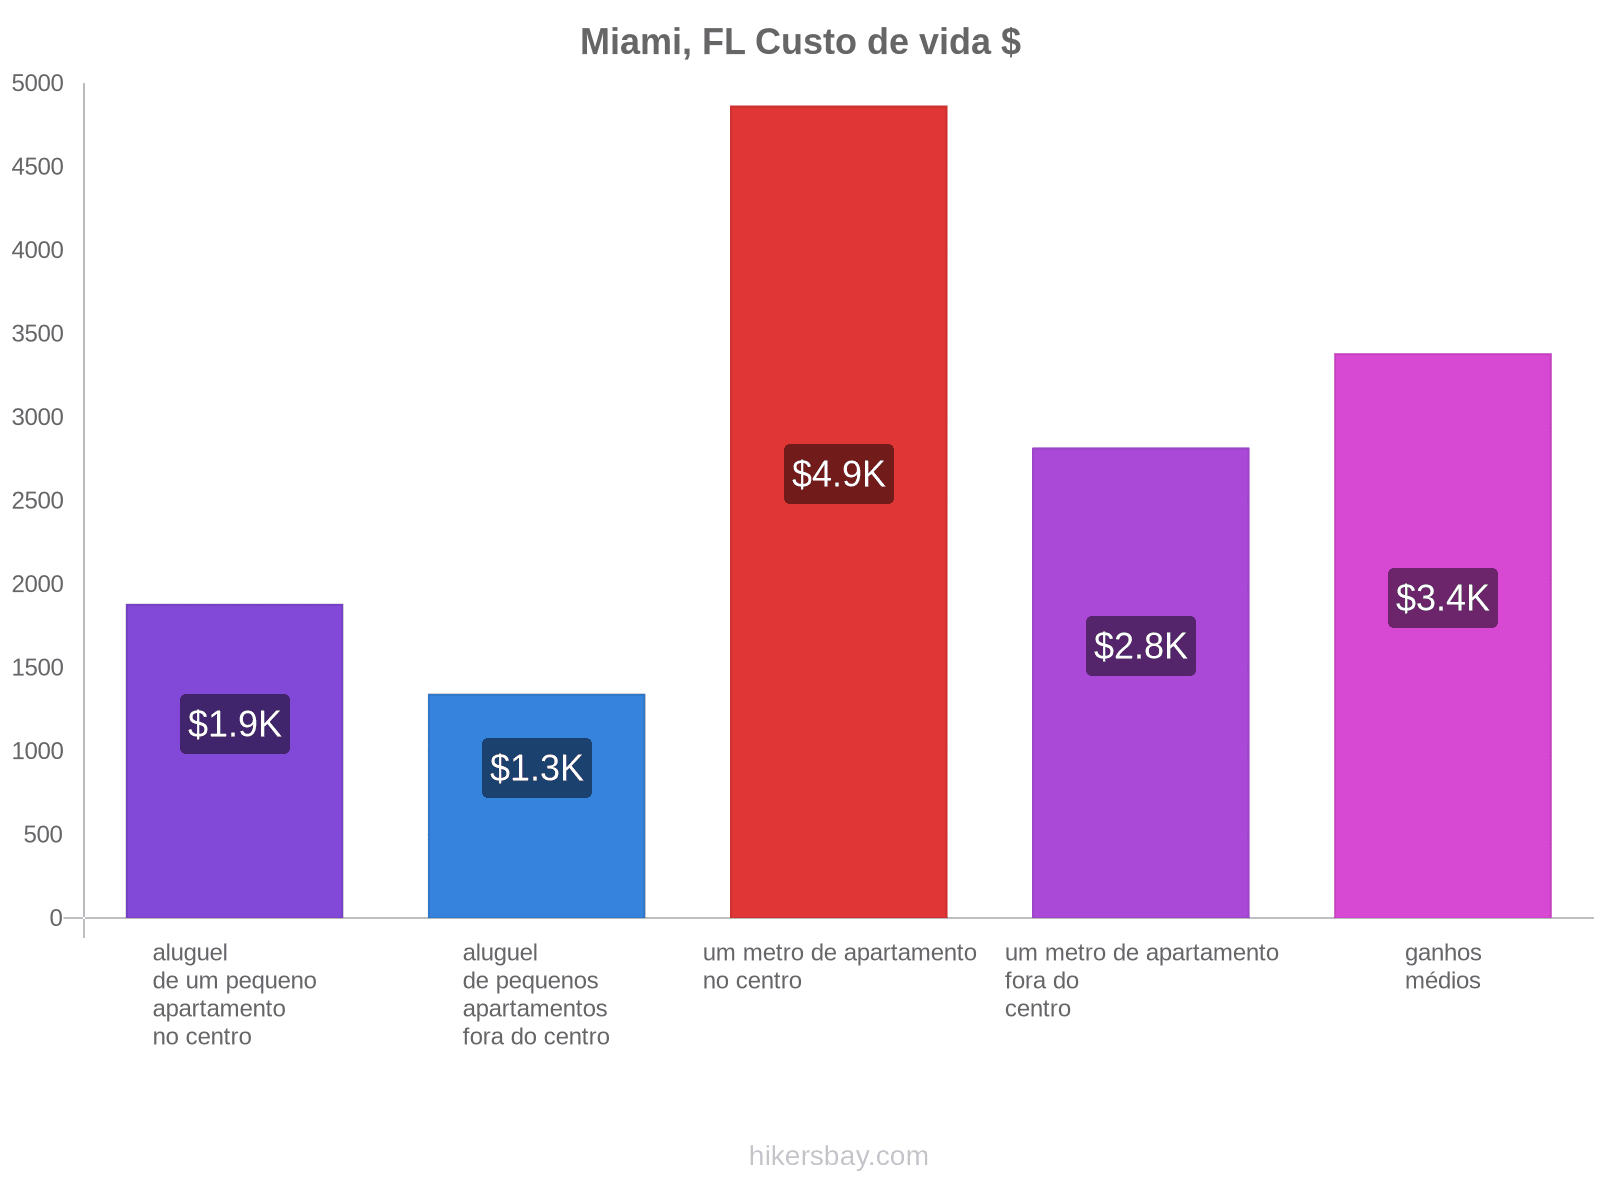 Miami, FL custo de vida hikersbay.com